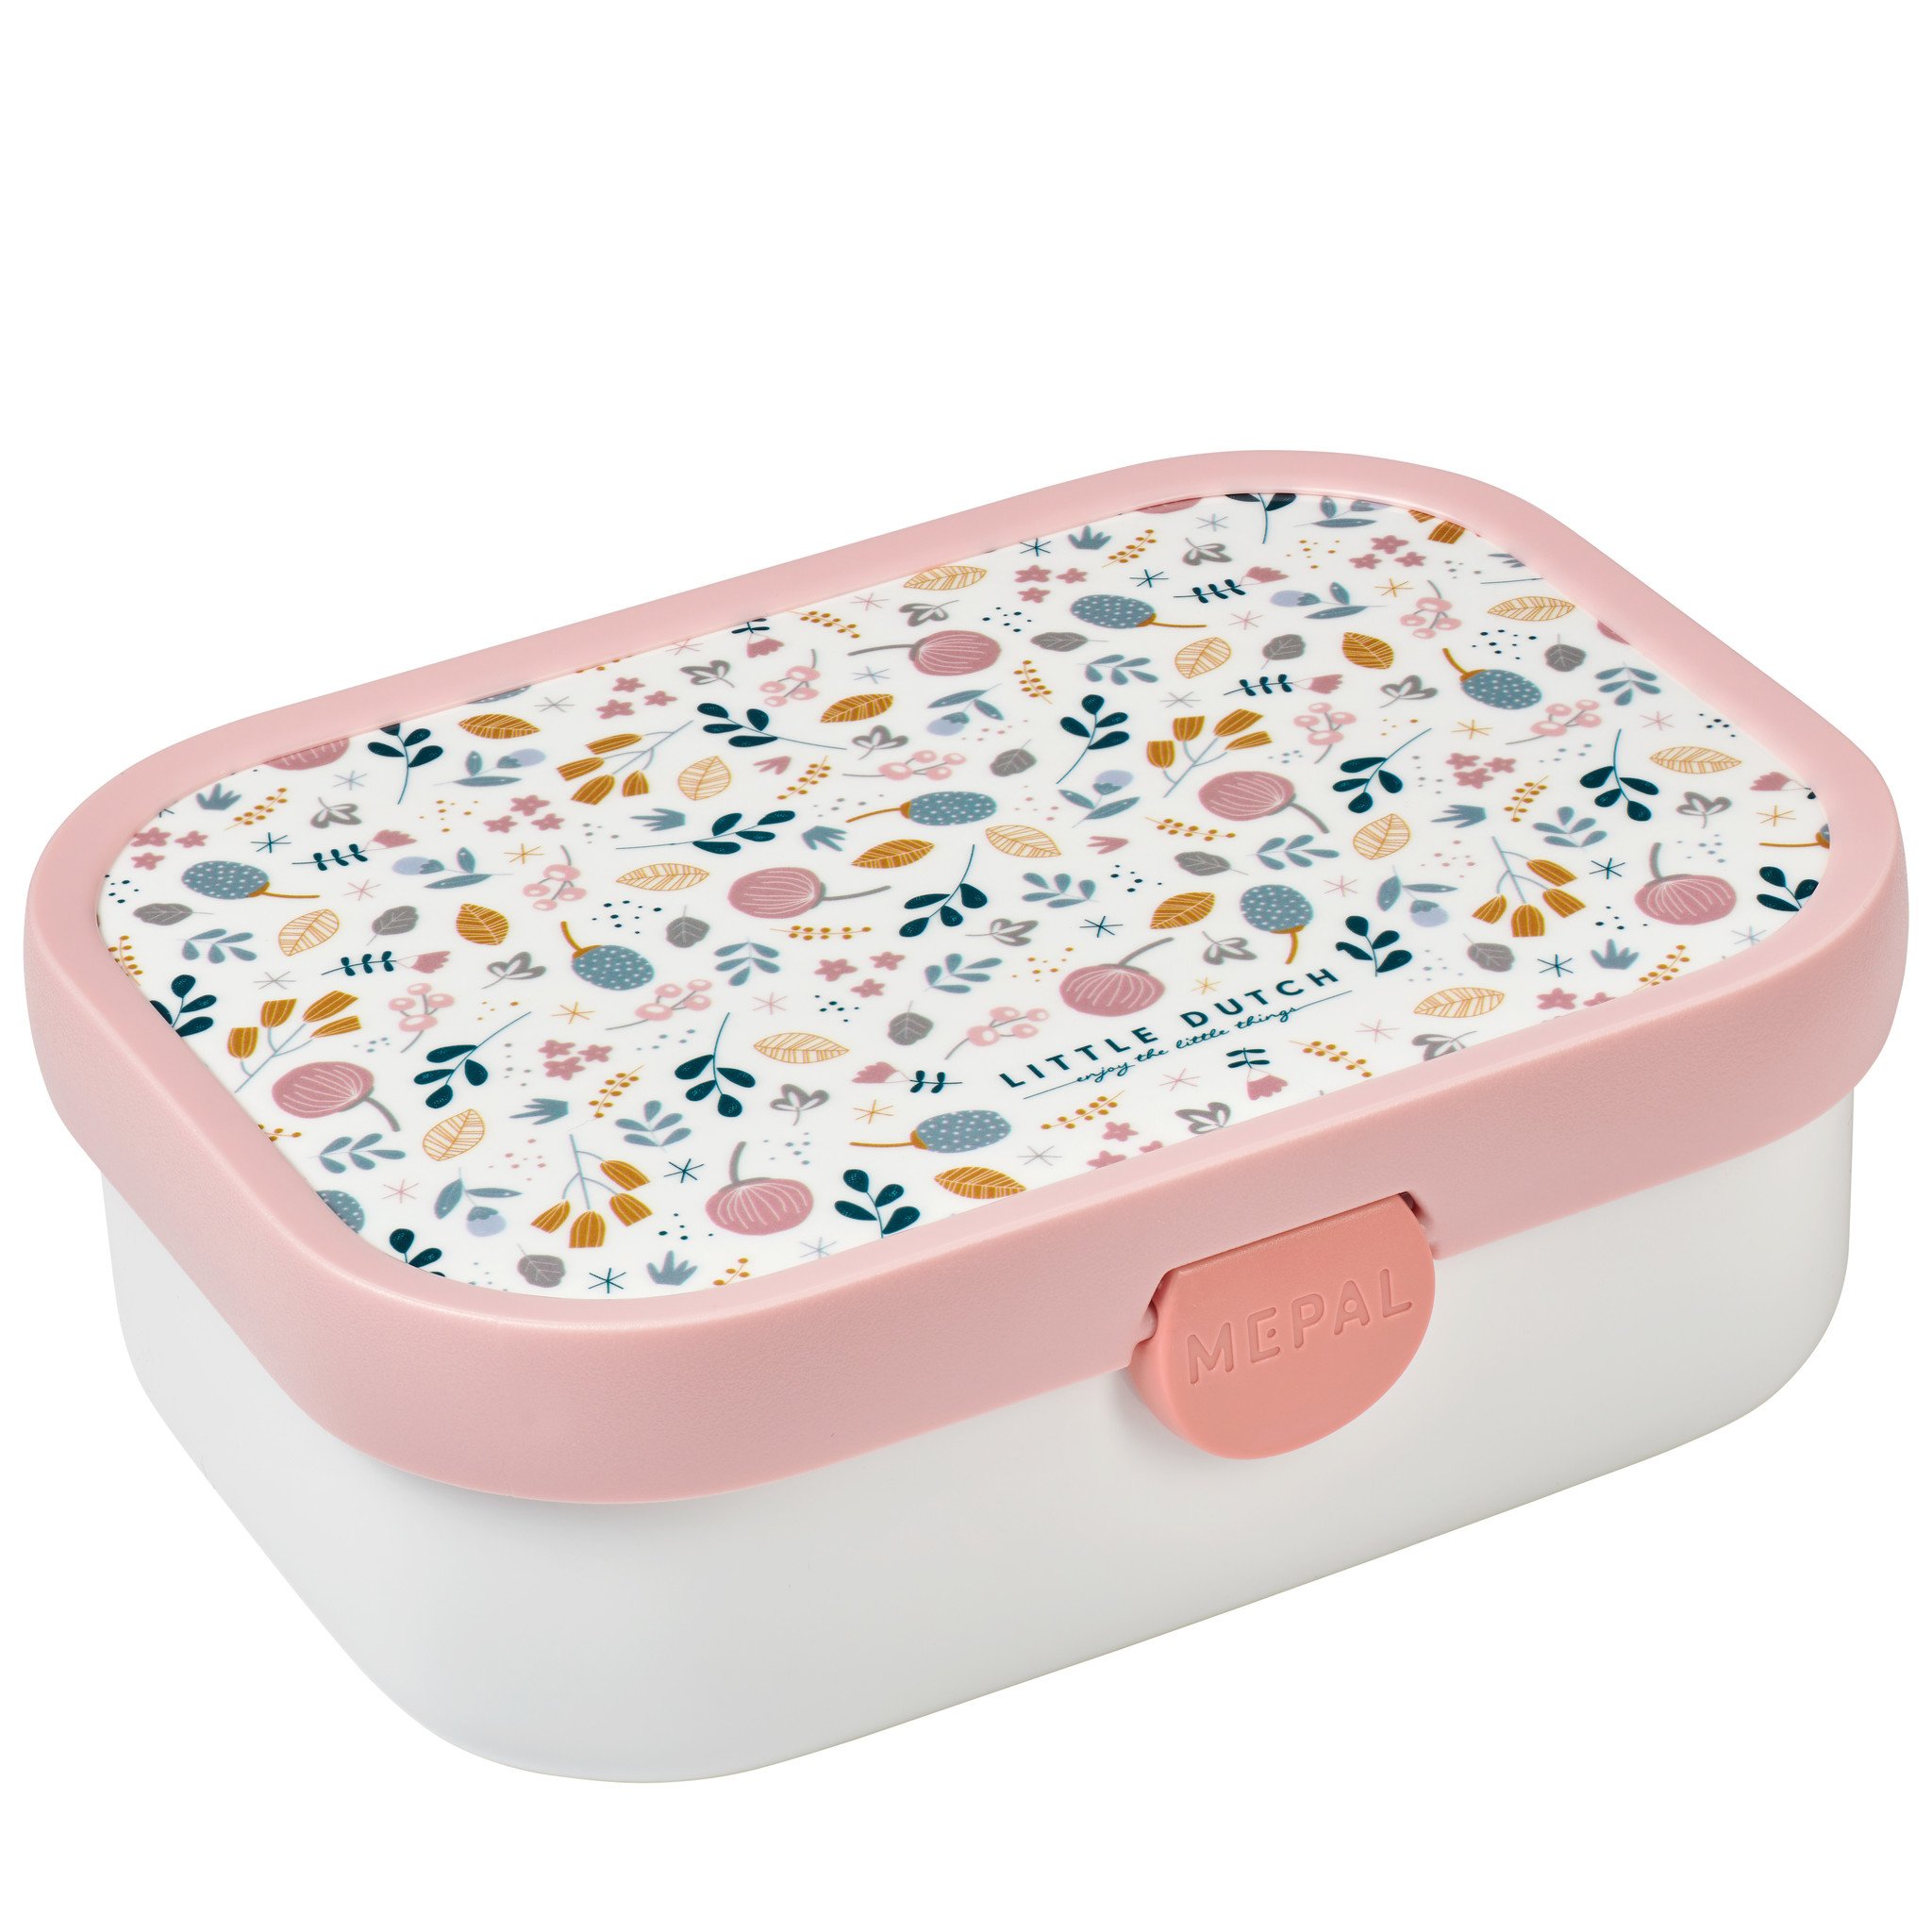 Little Dutch - MEPAL Brotdose Lunchbox 'Spring Flowers' - ACH WIE FEIN  Family Concept Store